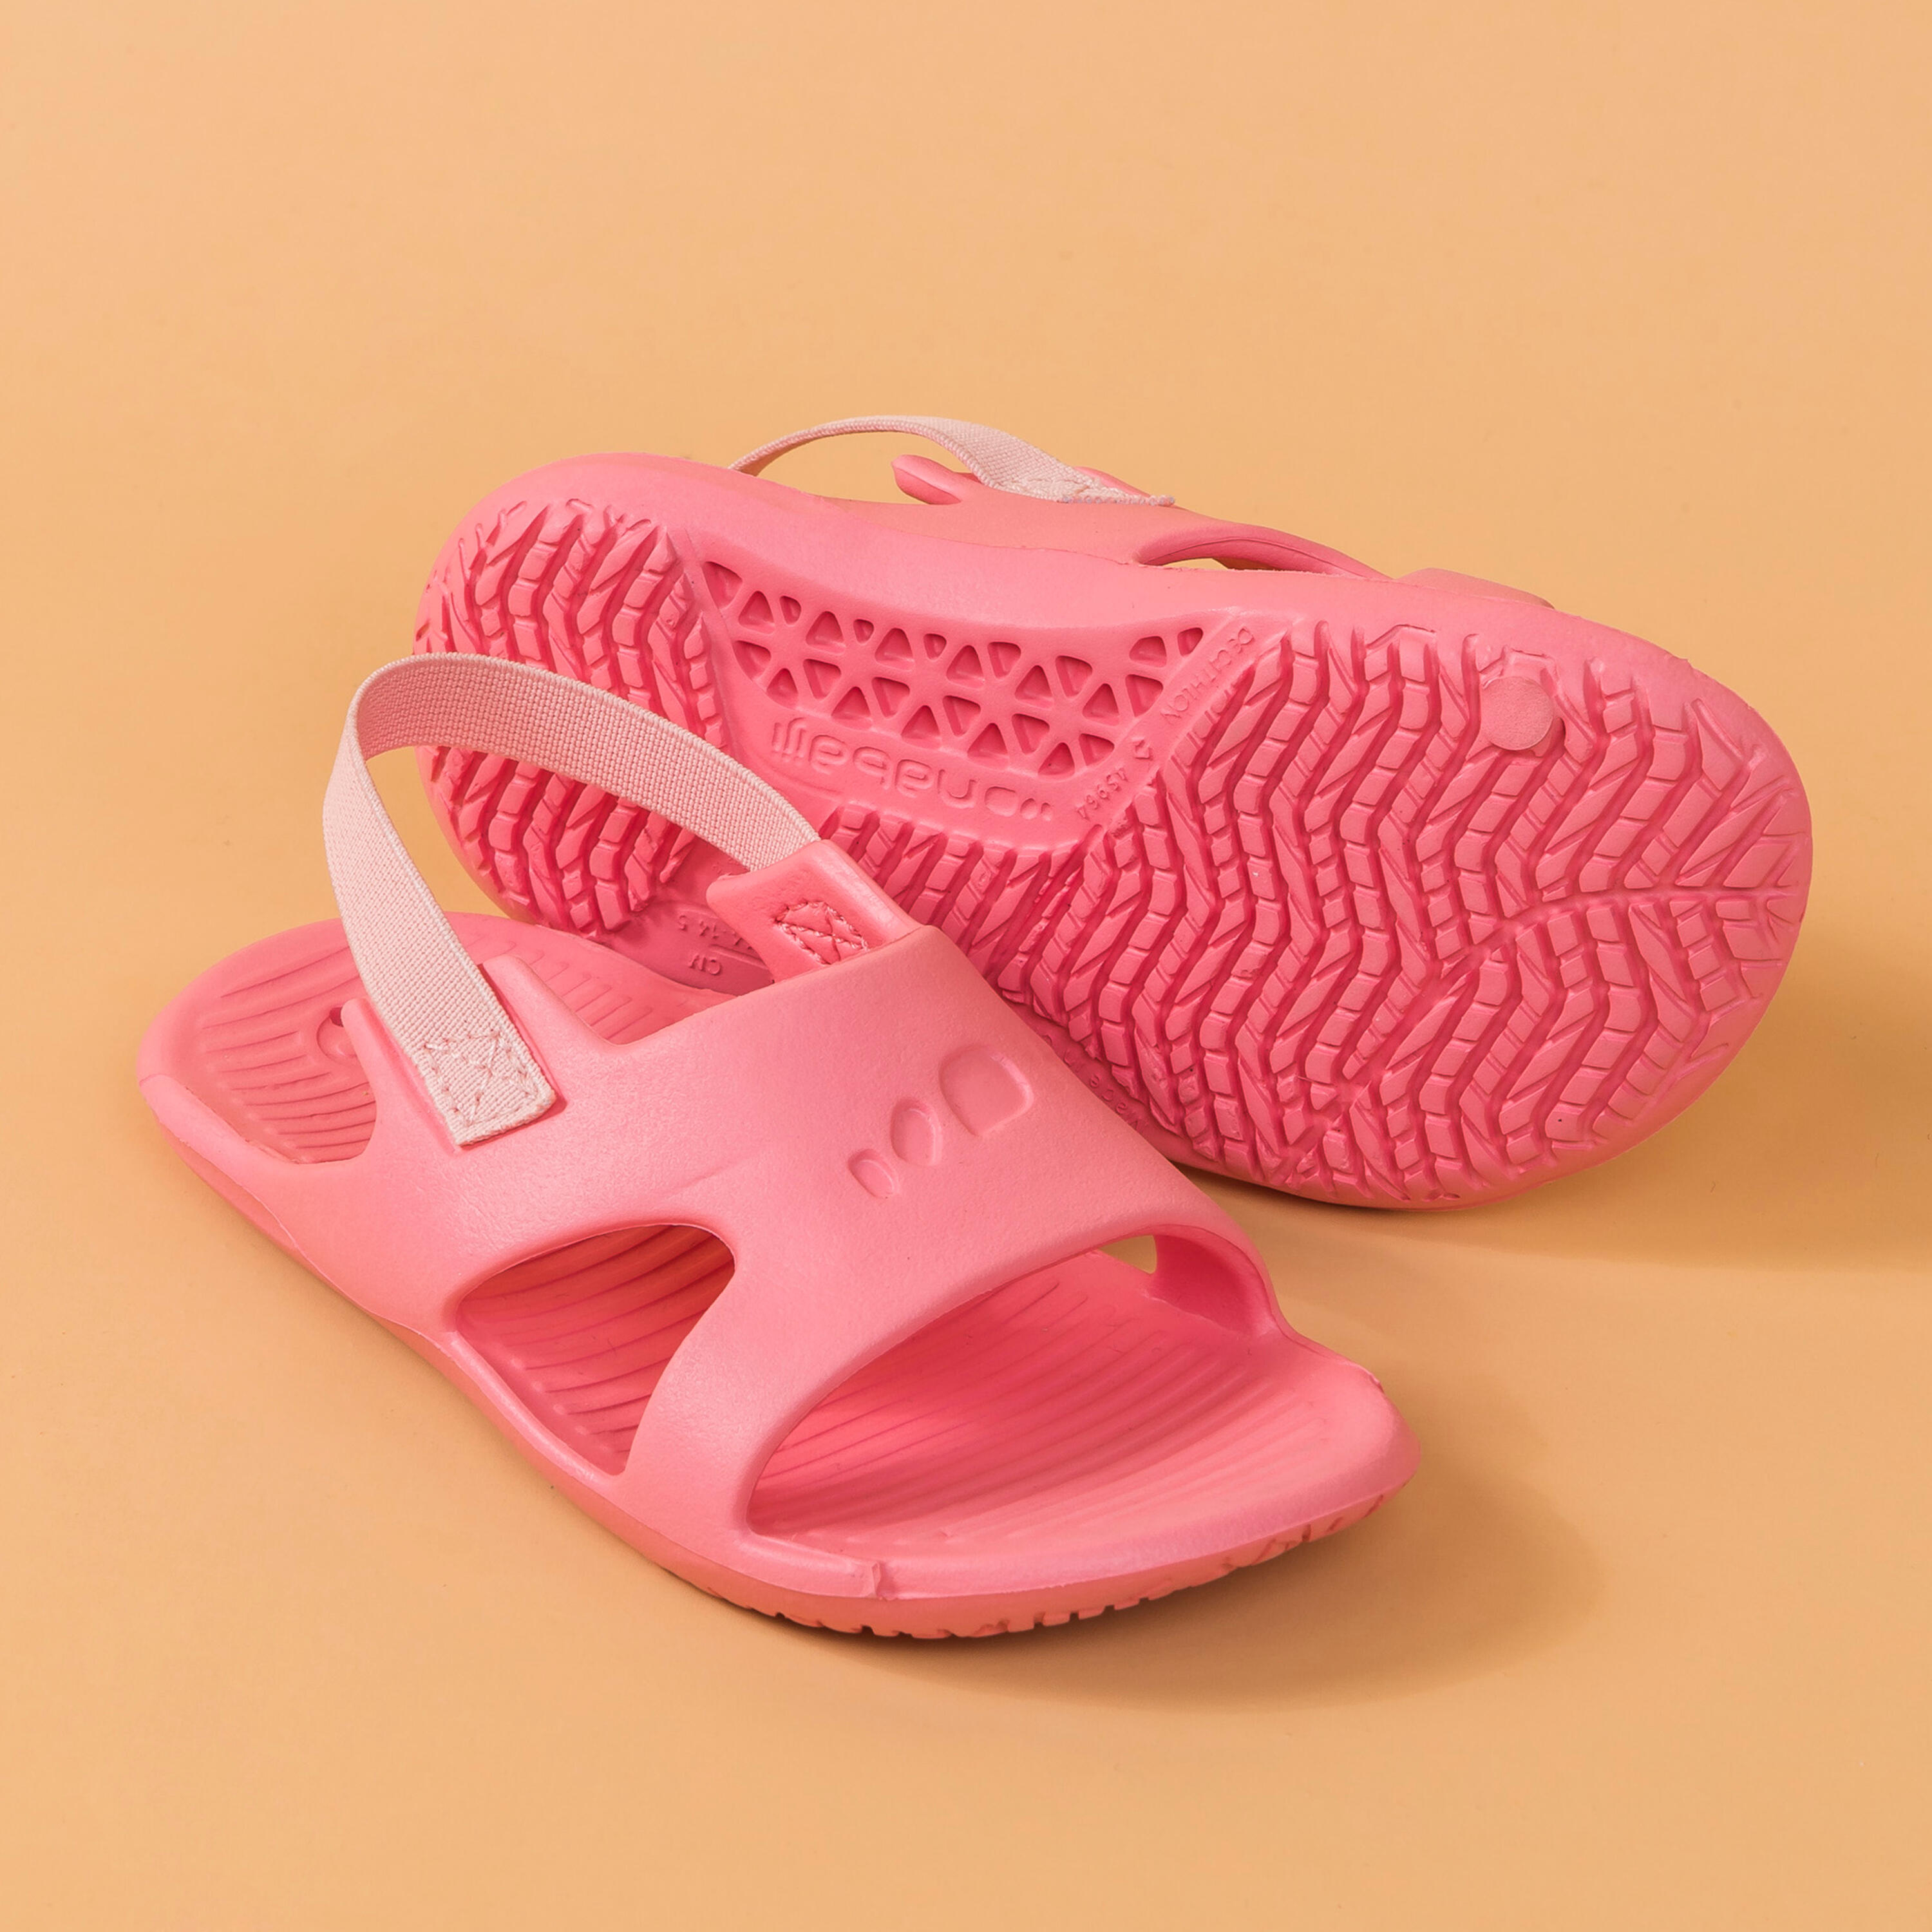 Image of Babies’ Pool Shoe Sandals - Pink